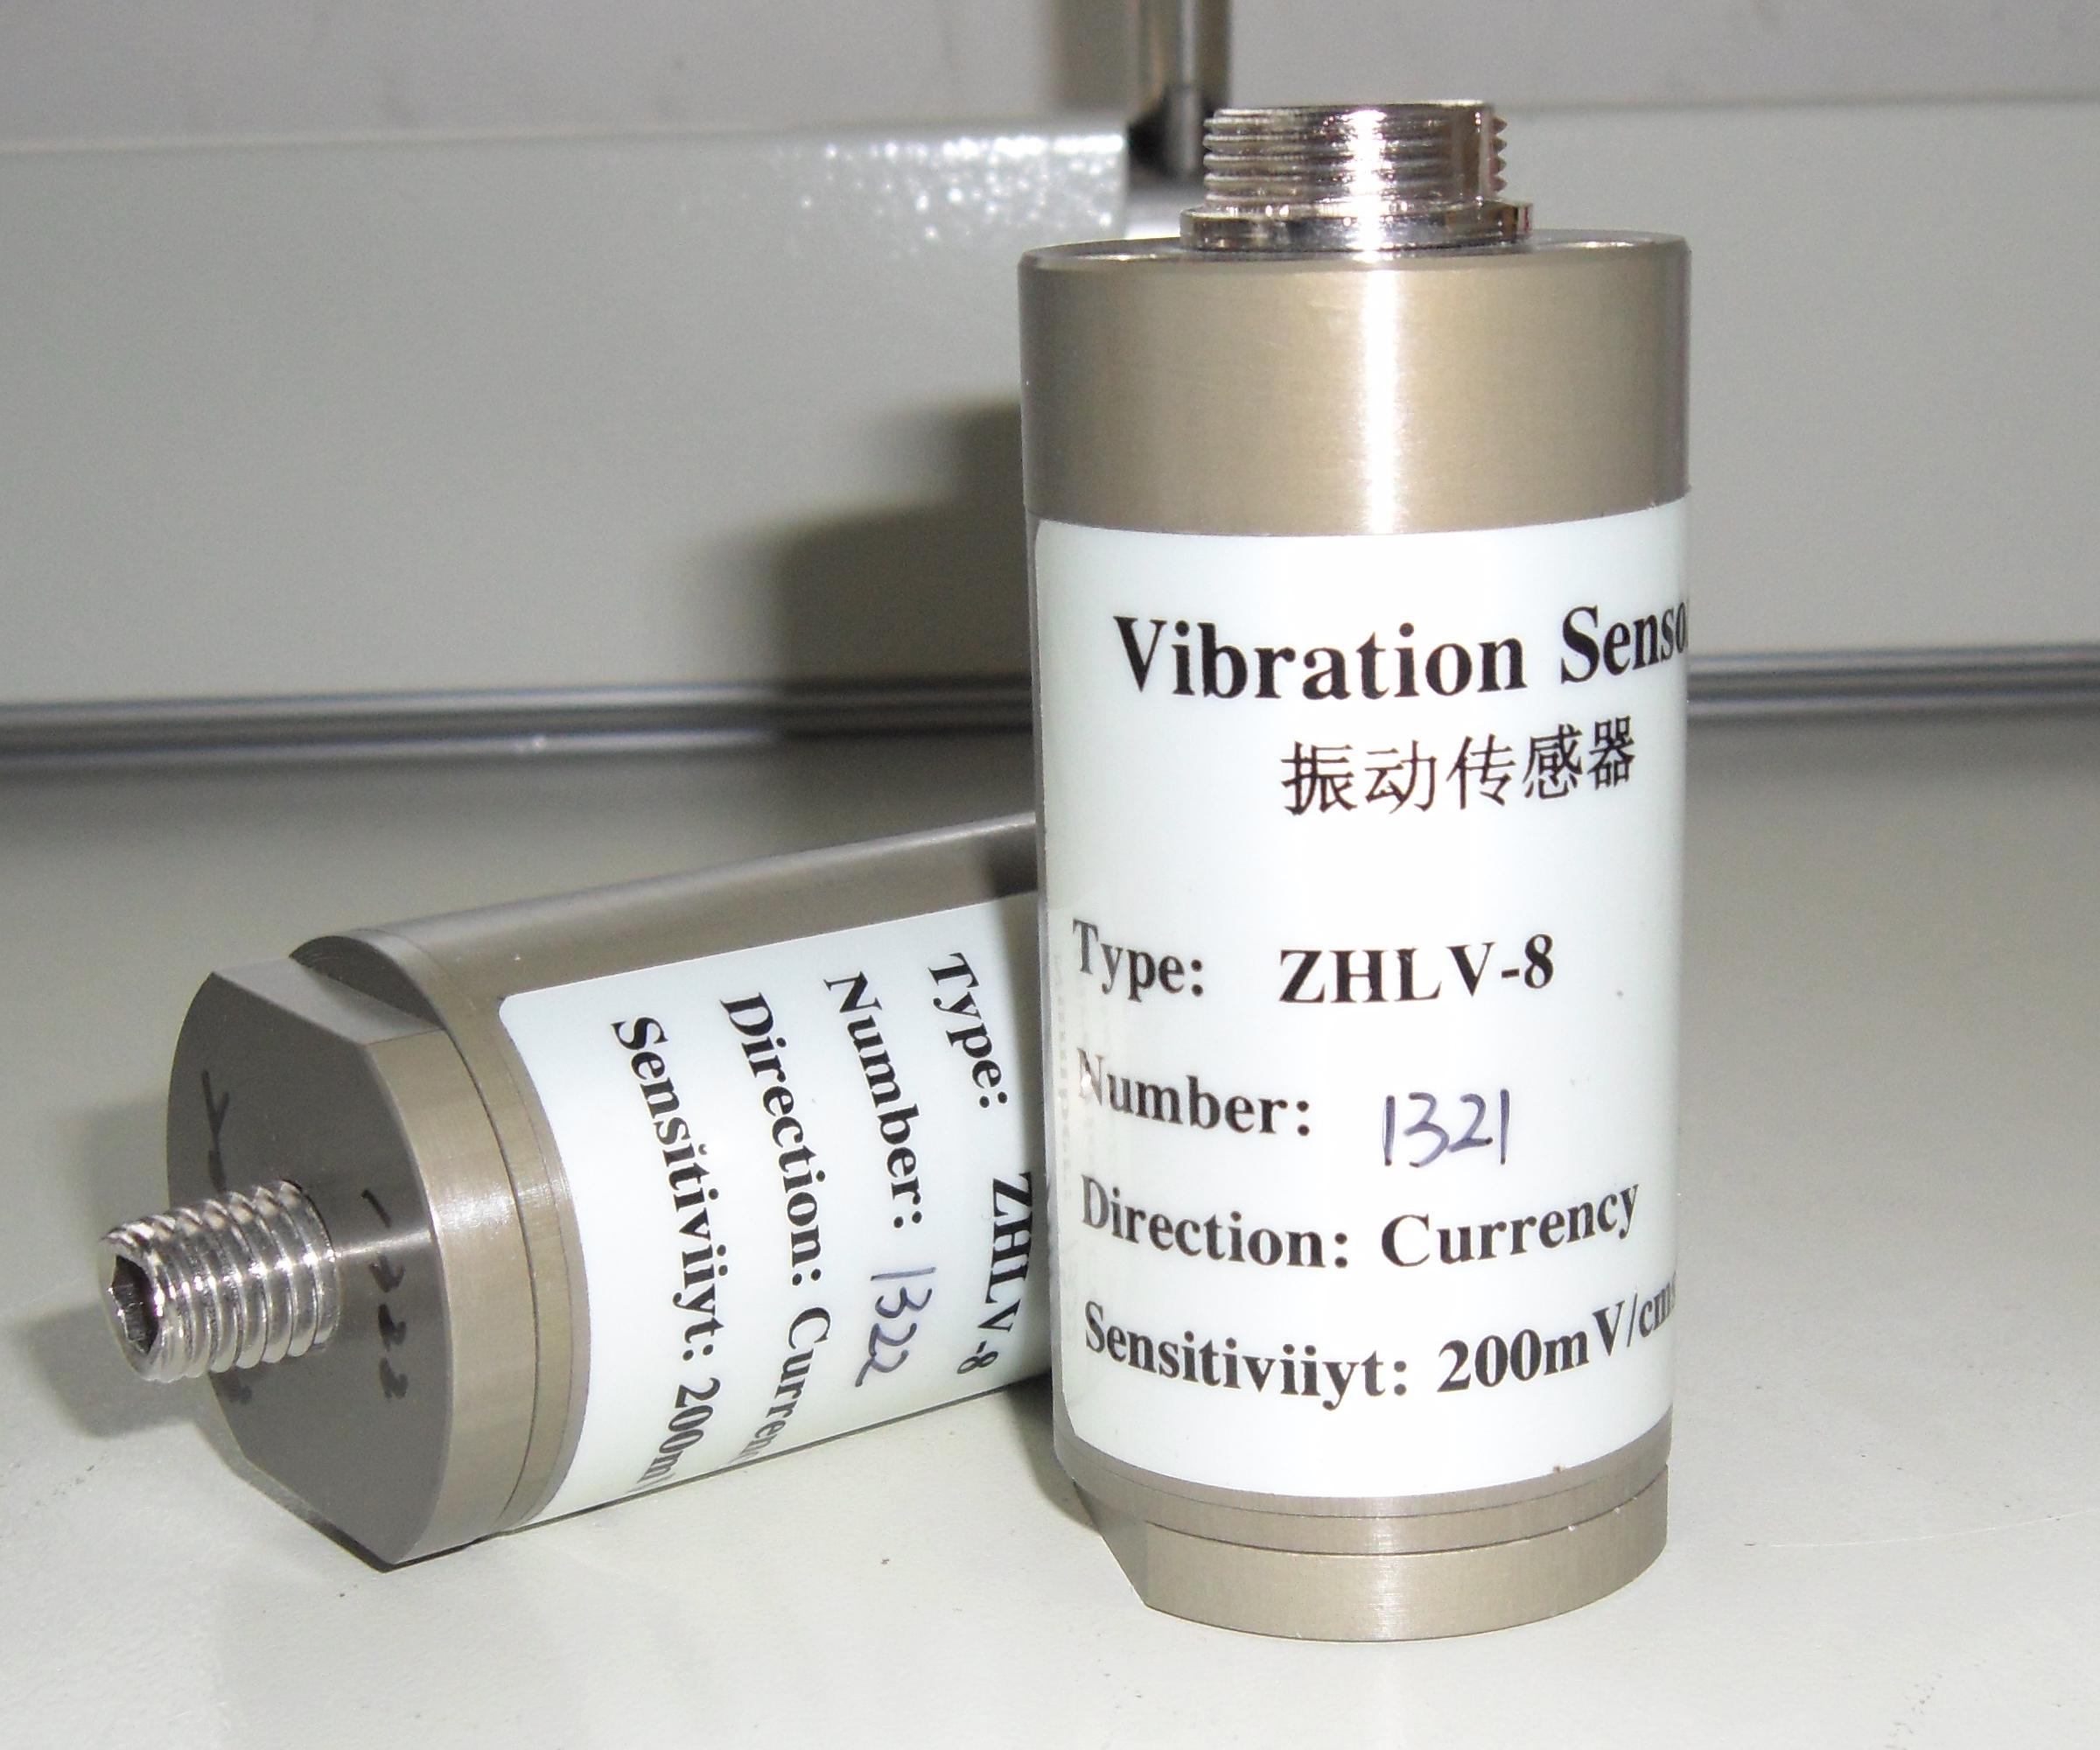 ZHLV-8 Vibration Sensor振動傳感器